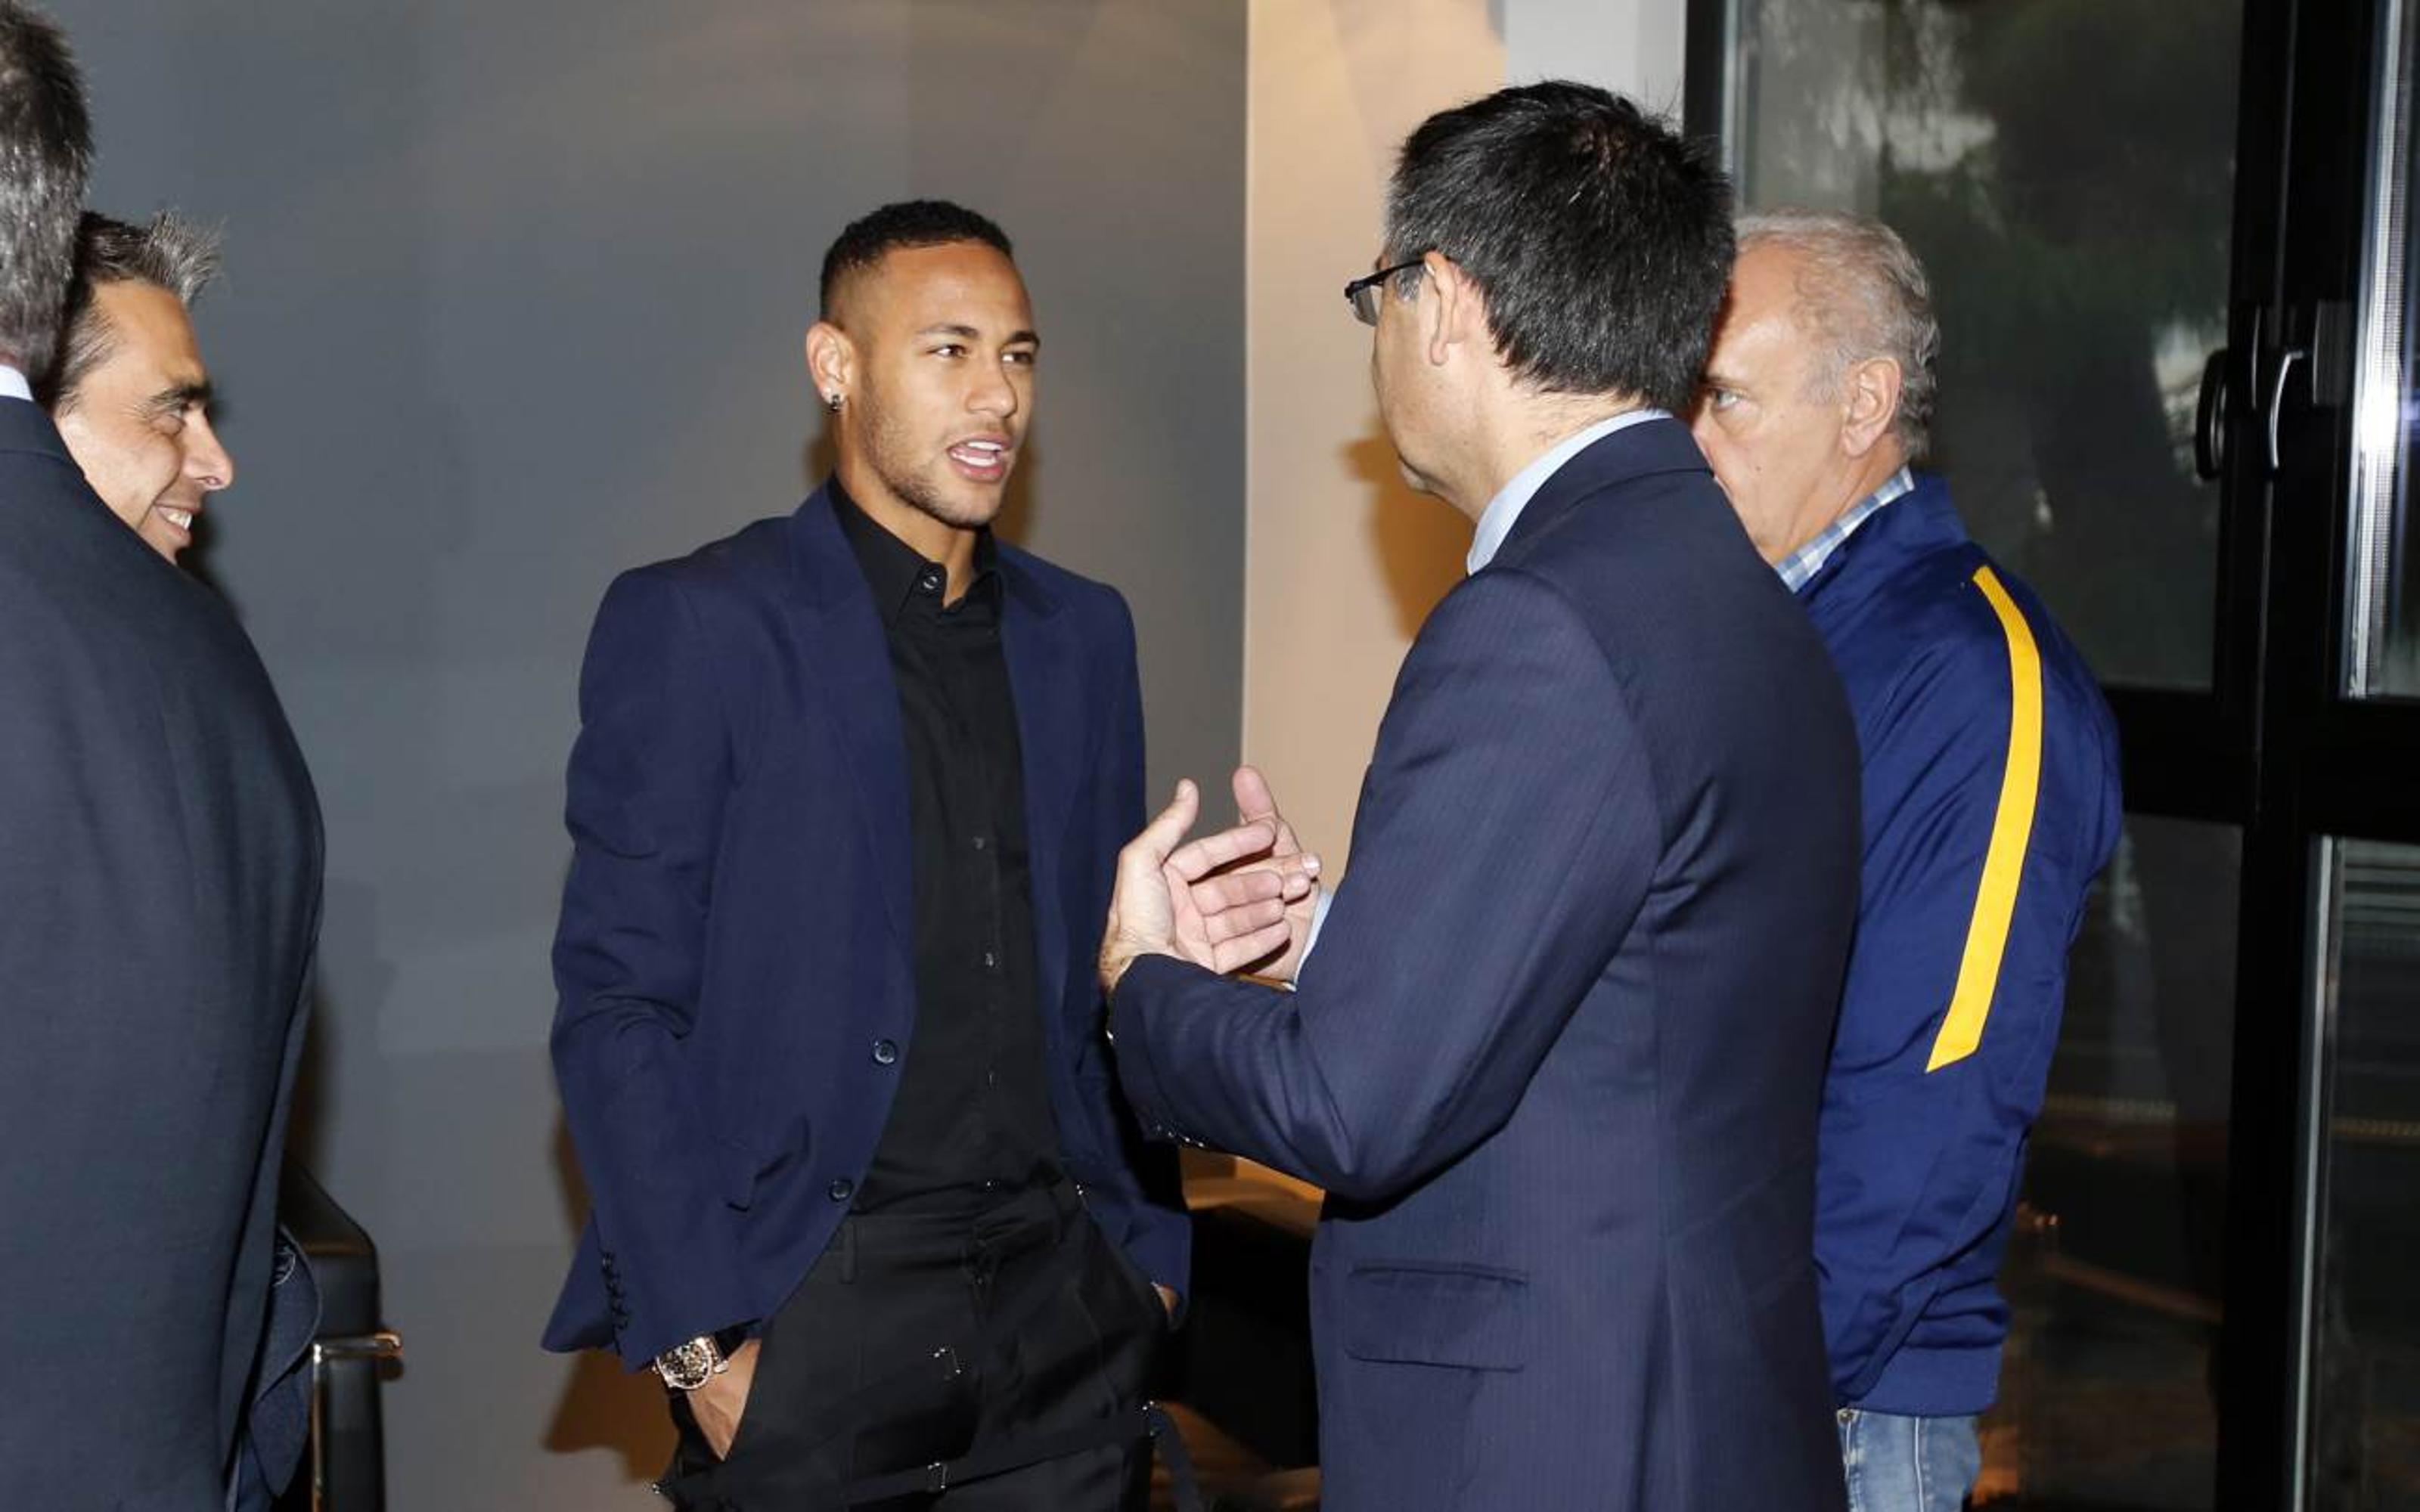 Neymar Jr extends his contract until 2021